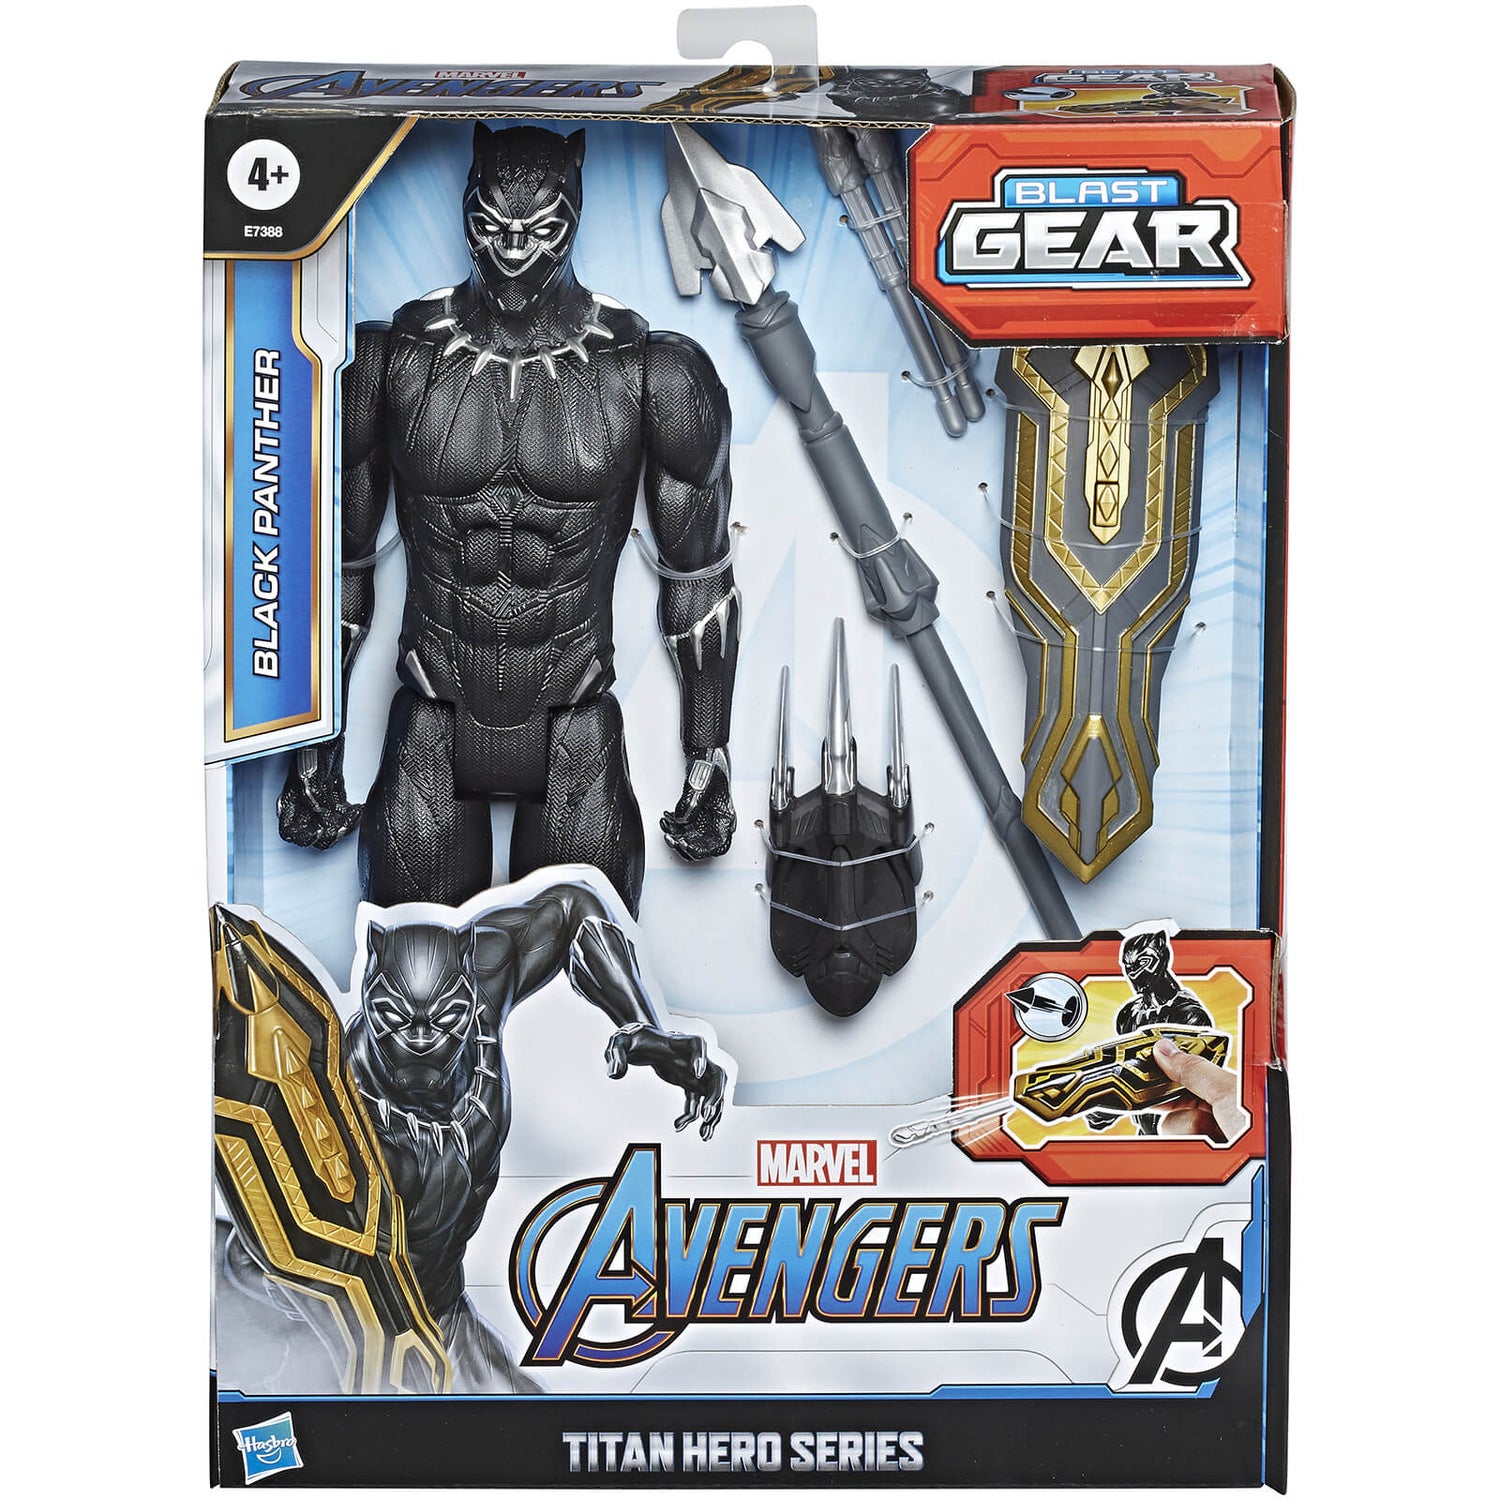 Hasbro Marvel Avengers Titan Hero Series - Blast Gear Black Panther Action Figure